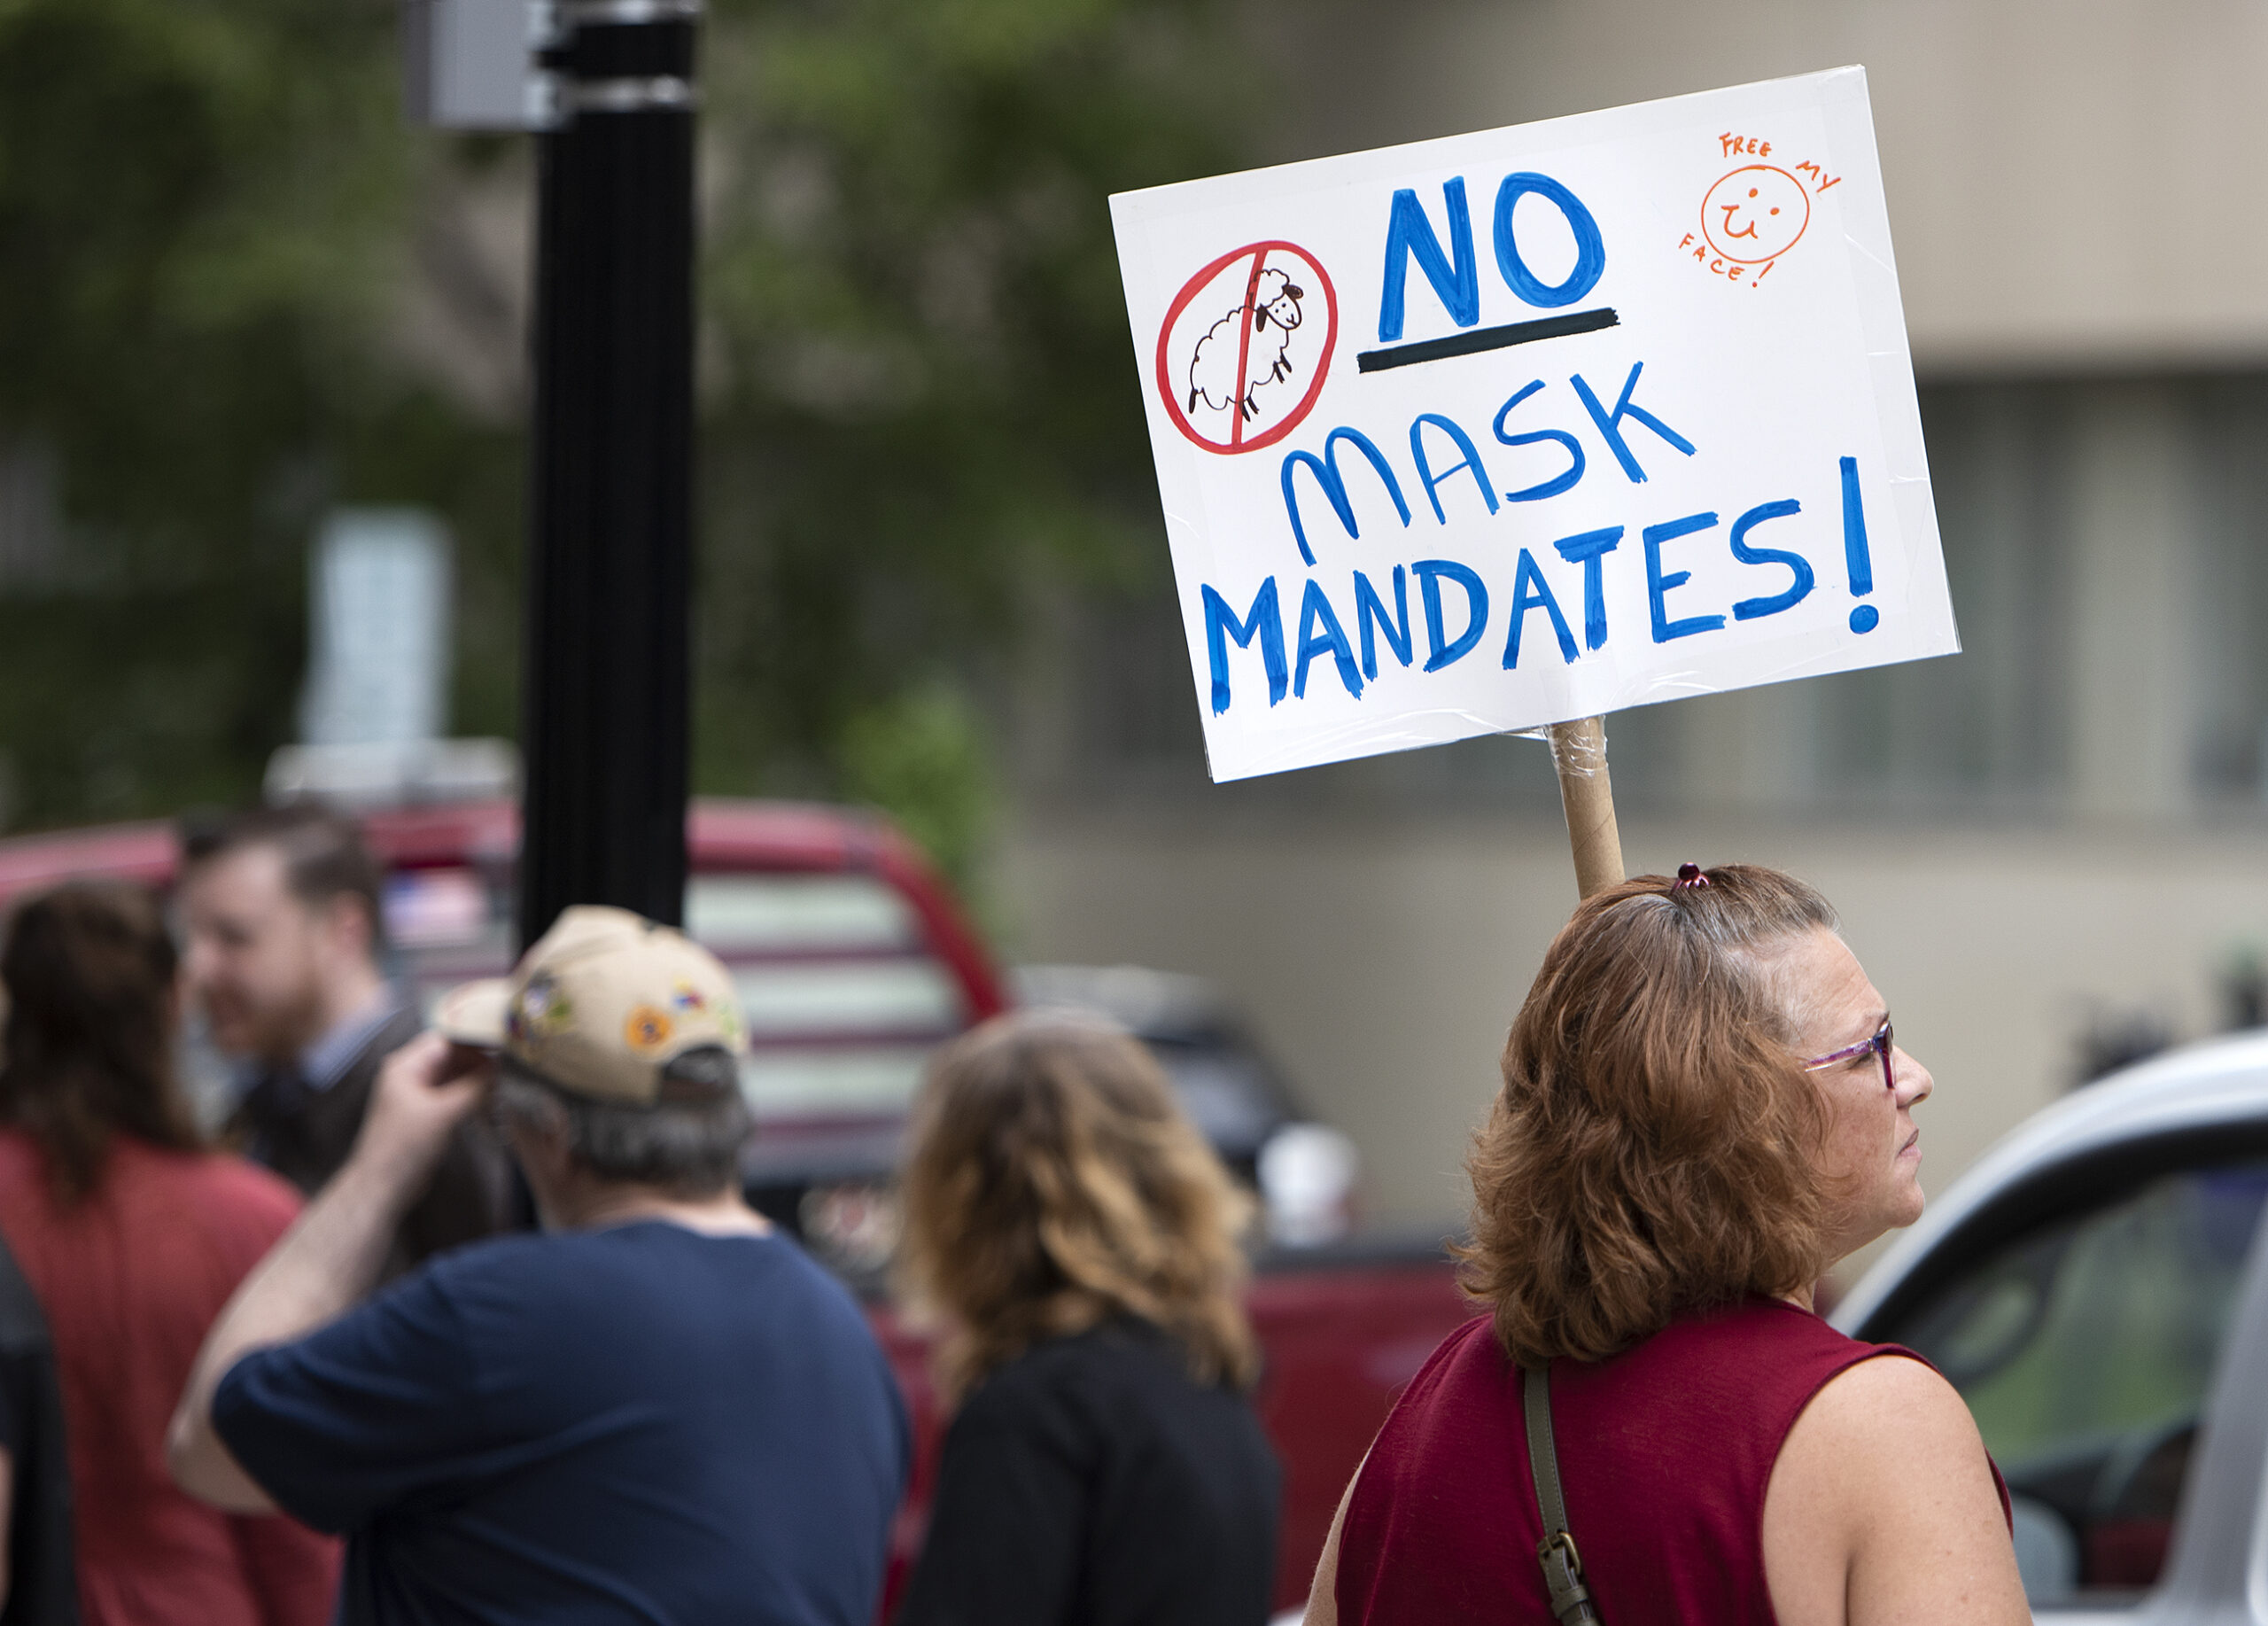 A woman's sign says "no mask mandates!"